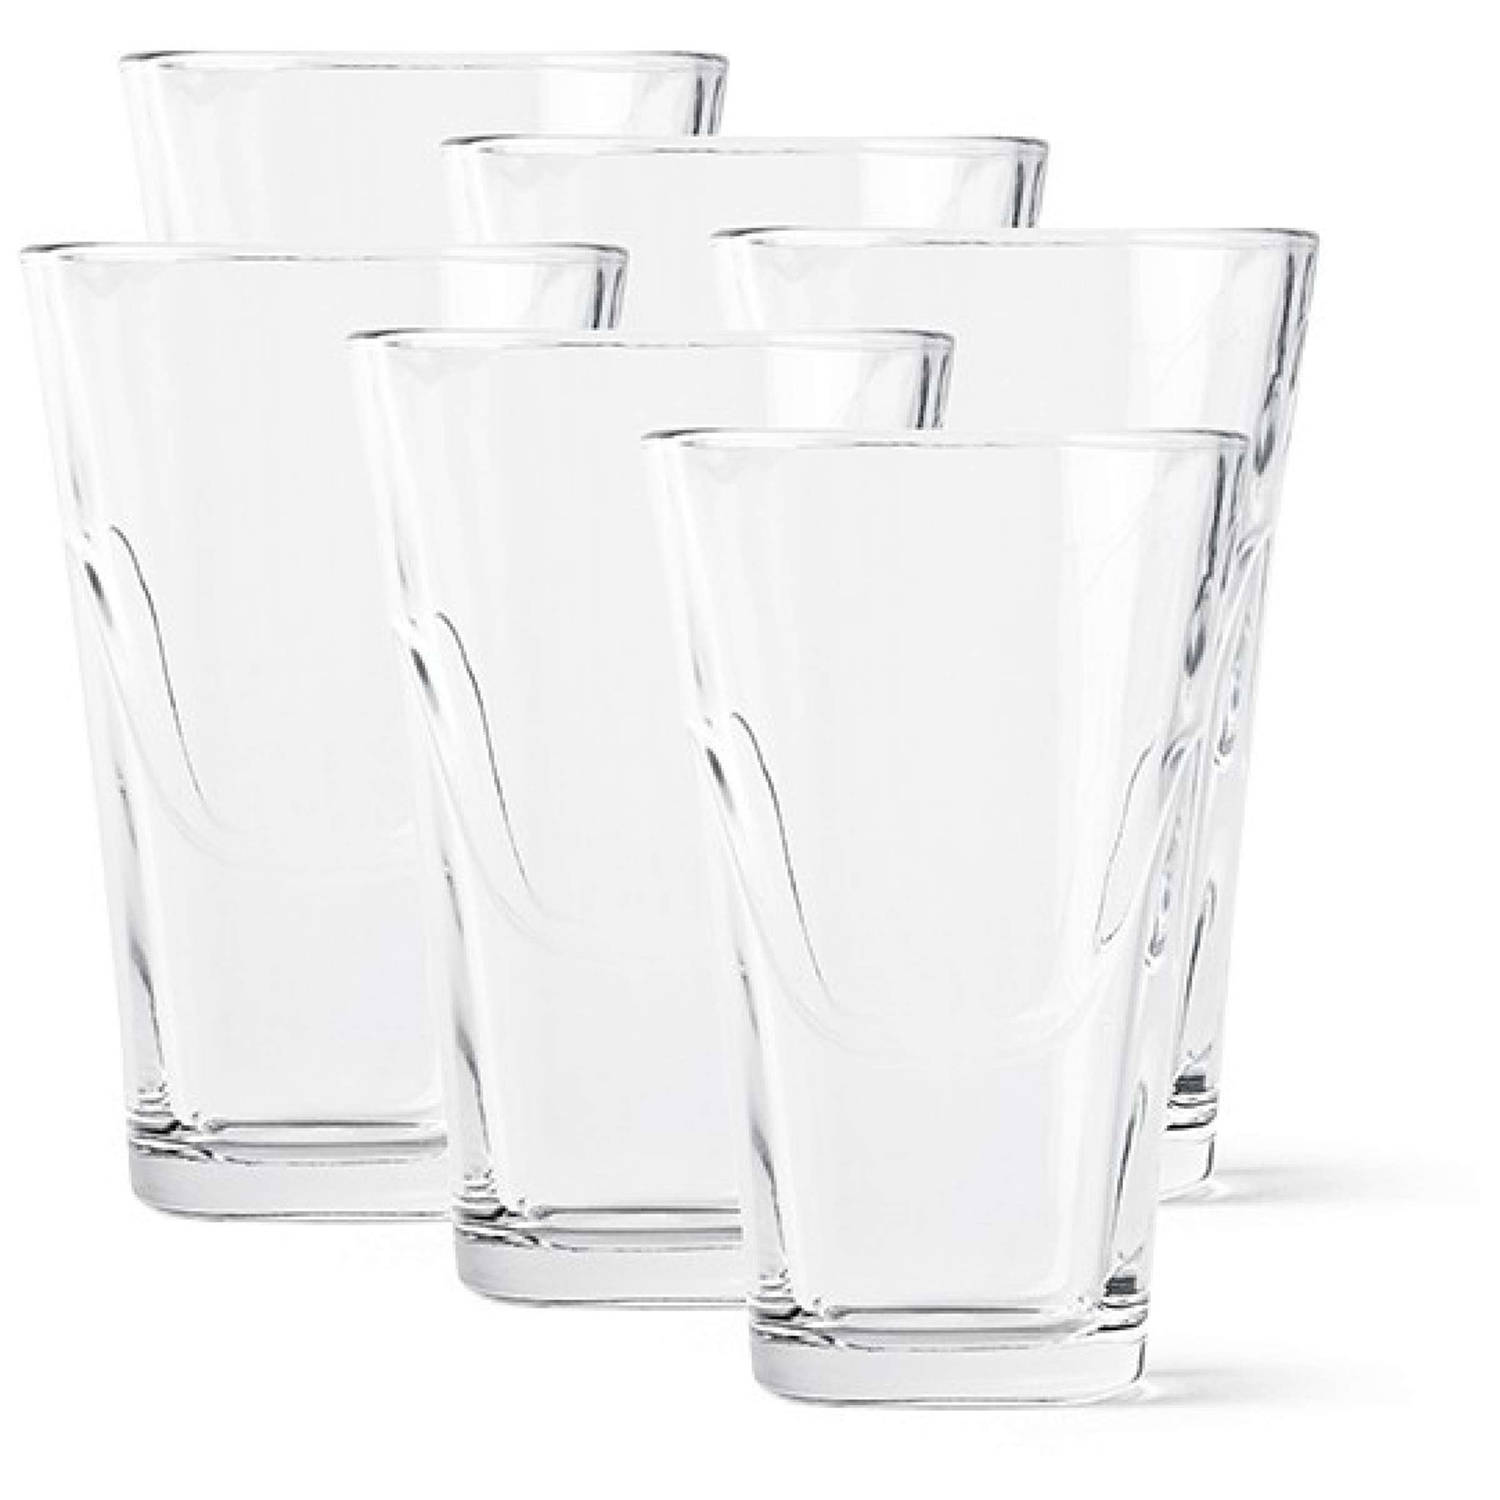 Menu Waterglas Set van 6 Stuks Glas Transparant